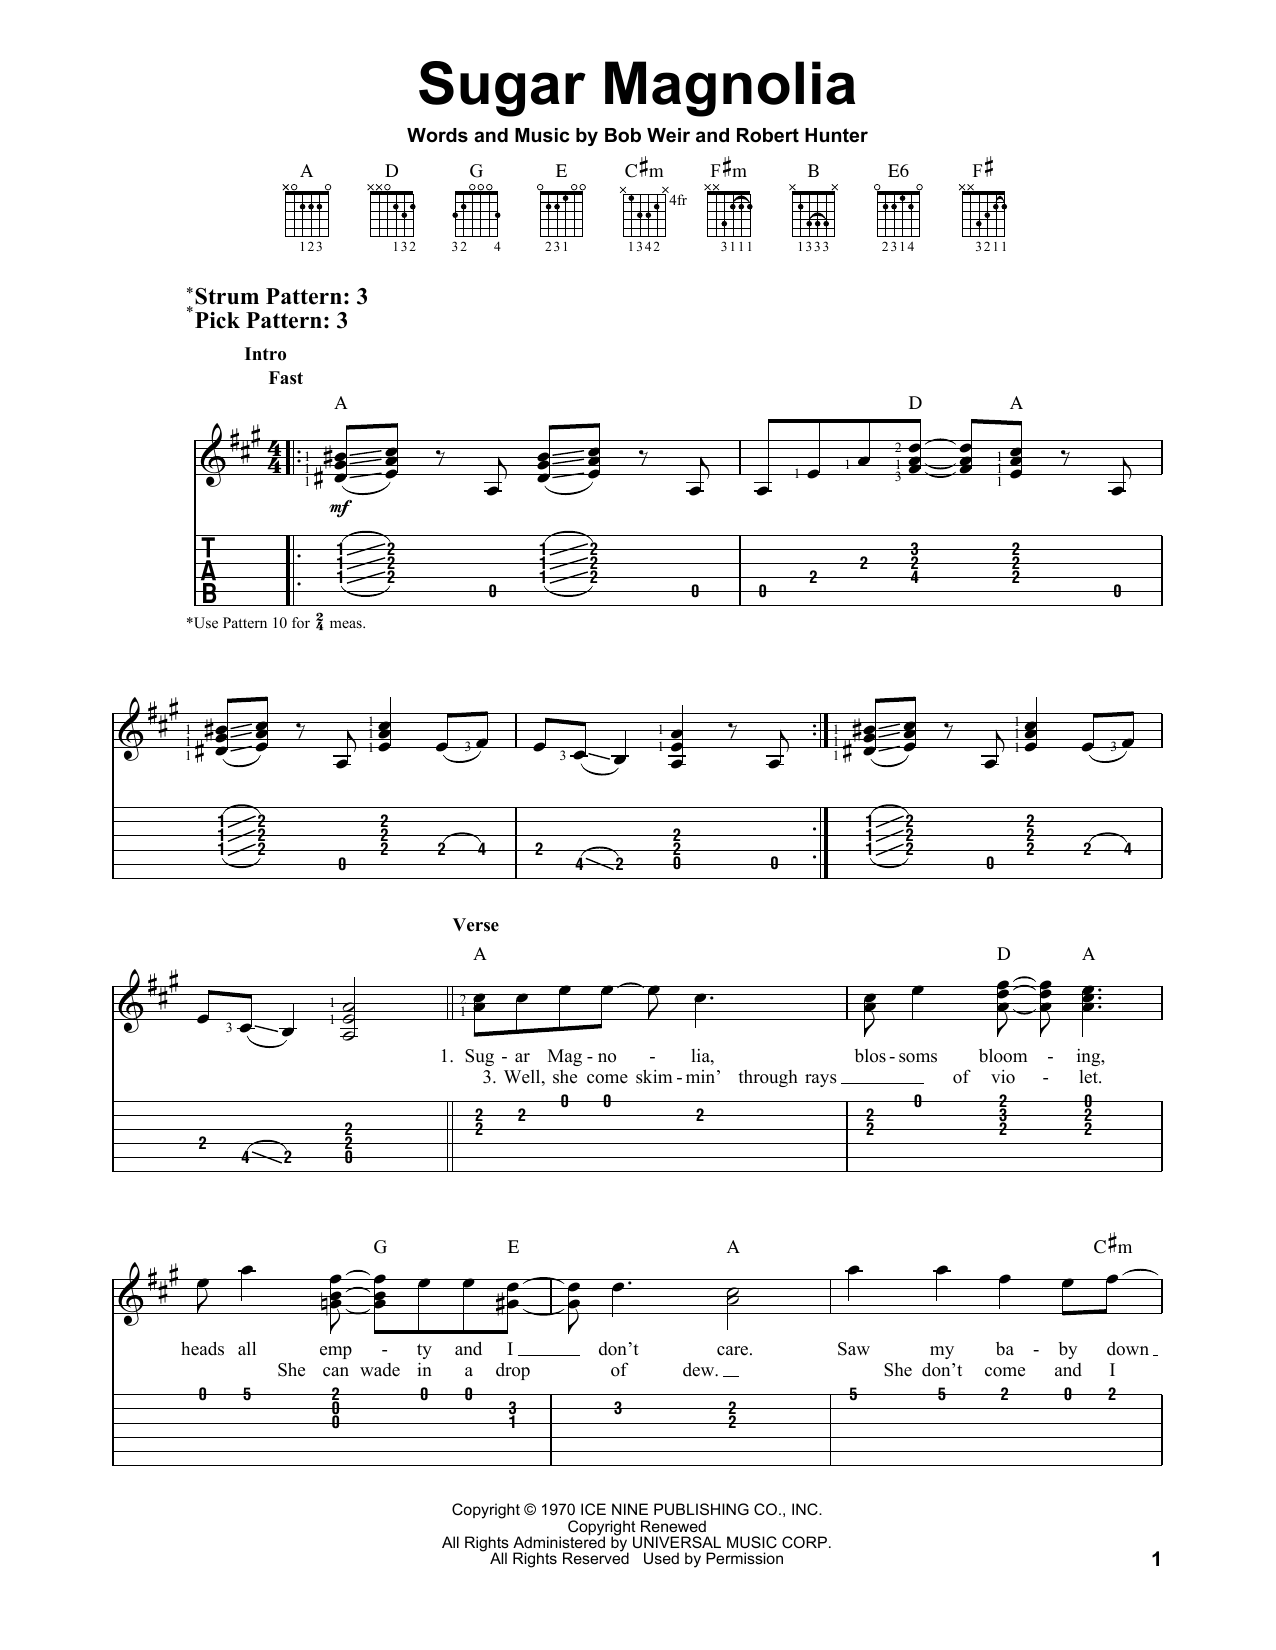 Grateful Dead Sugar Magnolia Sheet Music Notes & Chords for Guitar Tab - Download or Print PDF